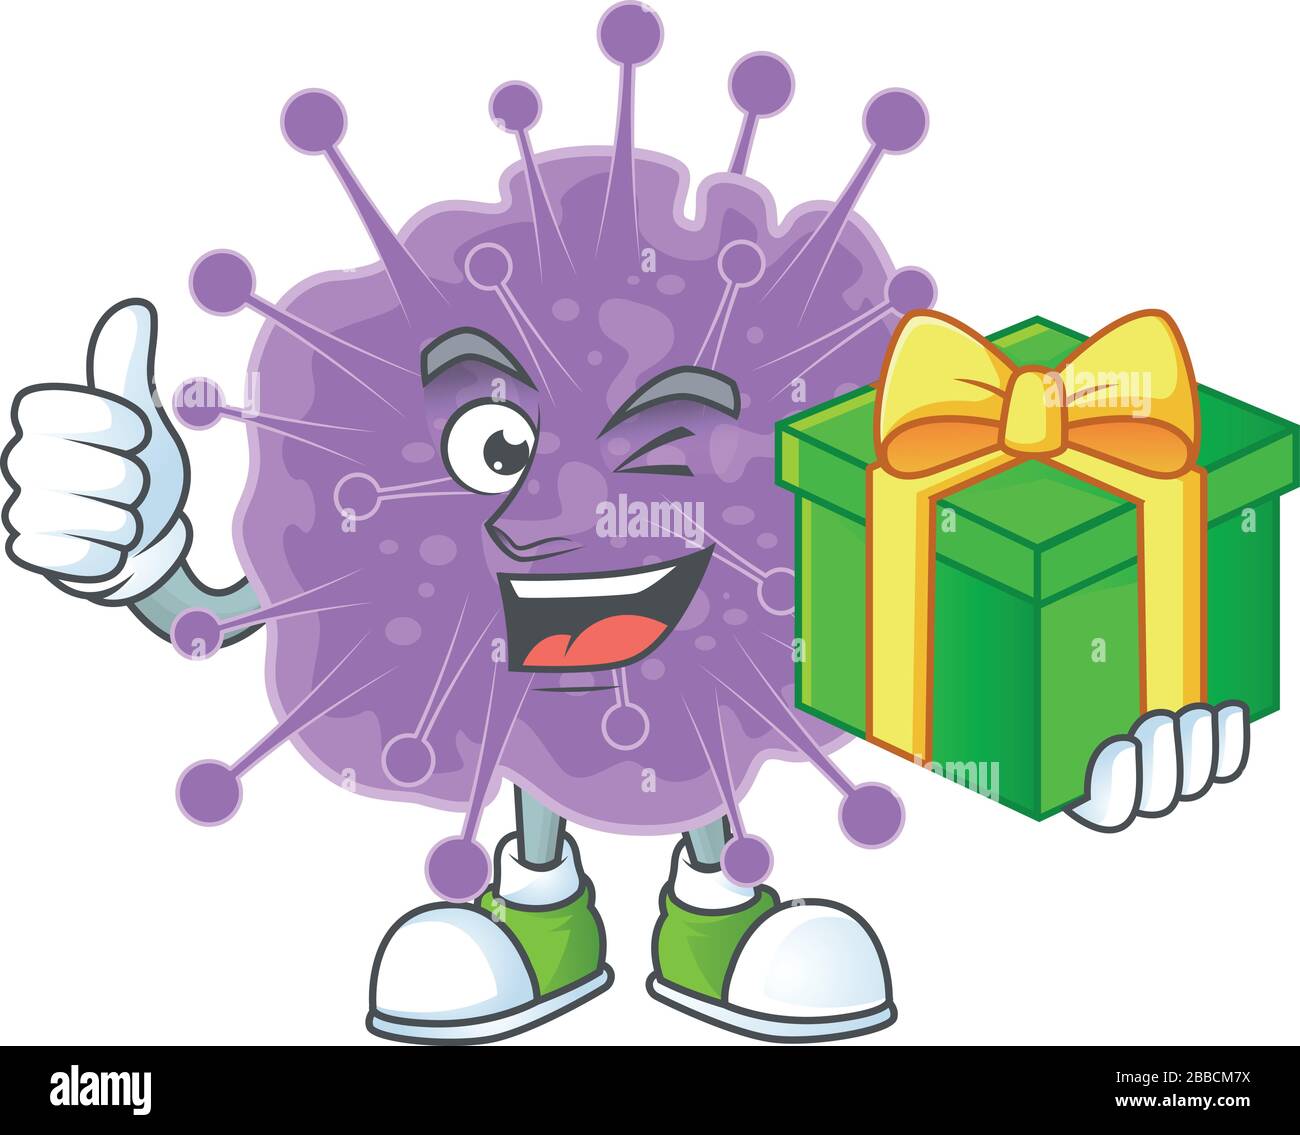 Cheerful coronavirus influenza cartoon character holding a gift box Stock Vector